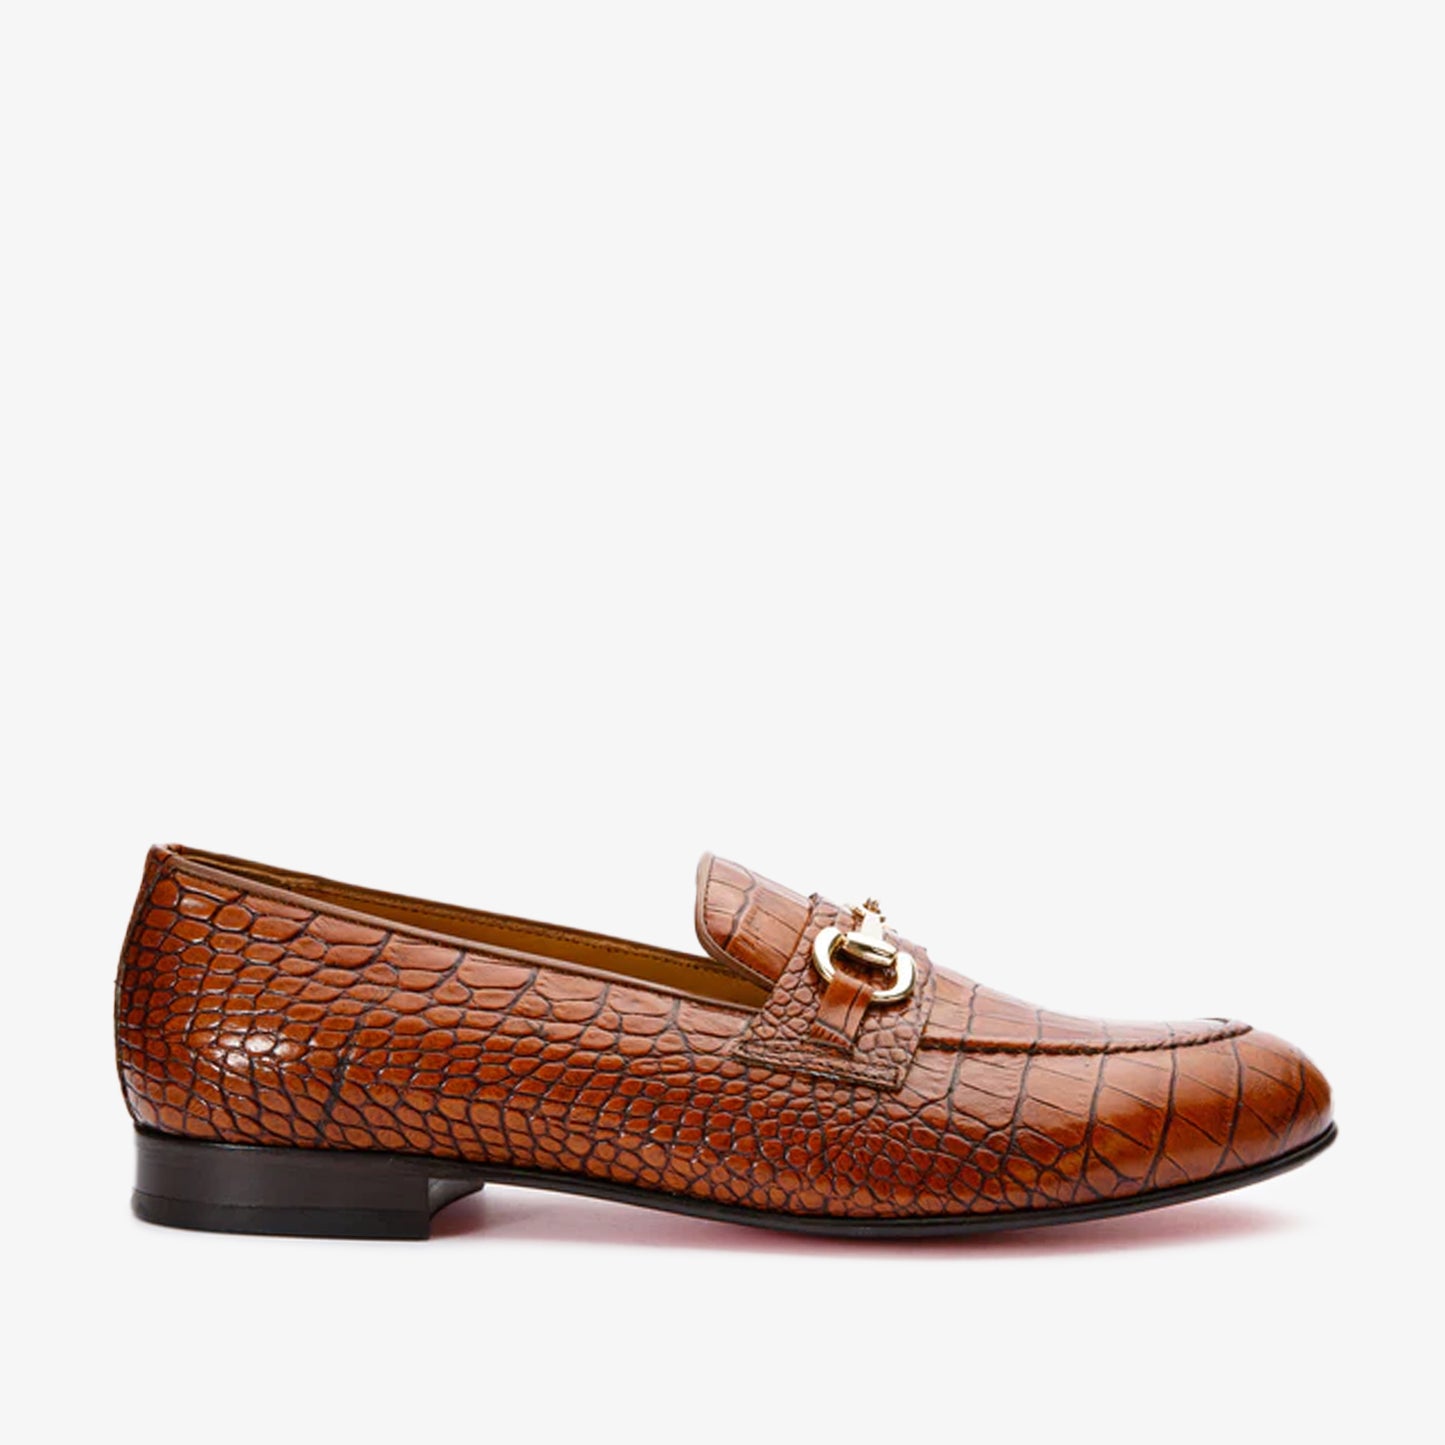 The Monaco Tan Leather Men Shoe Bit Loafer